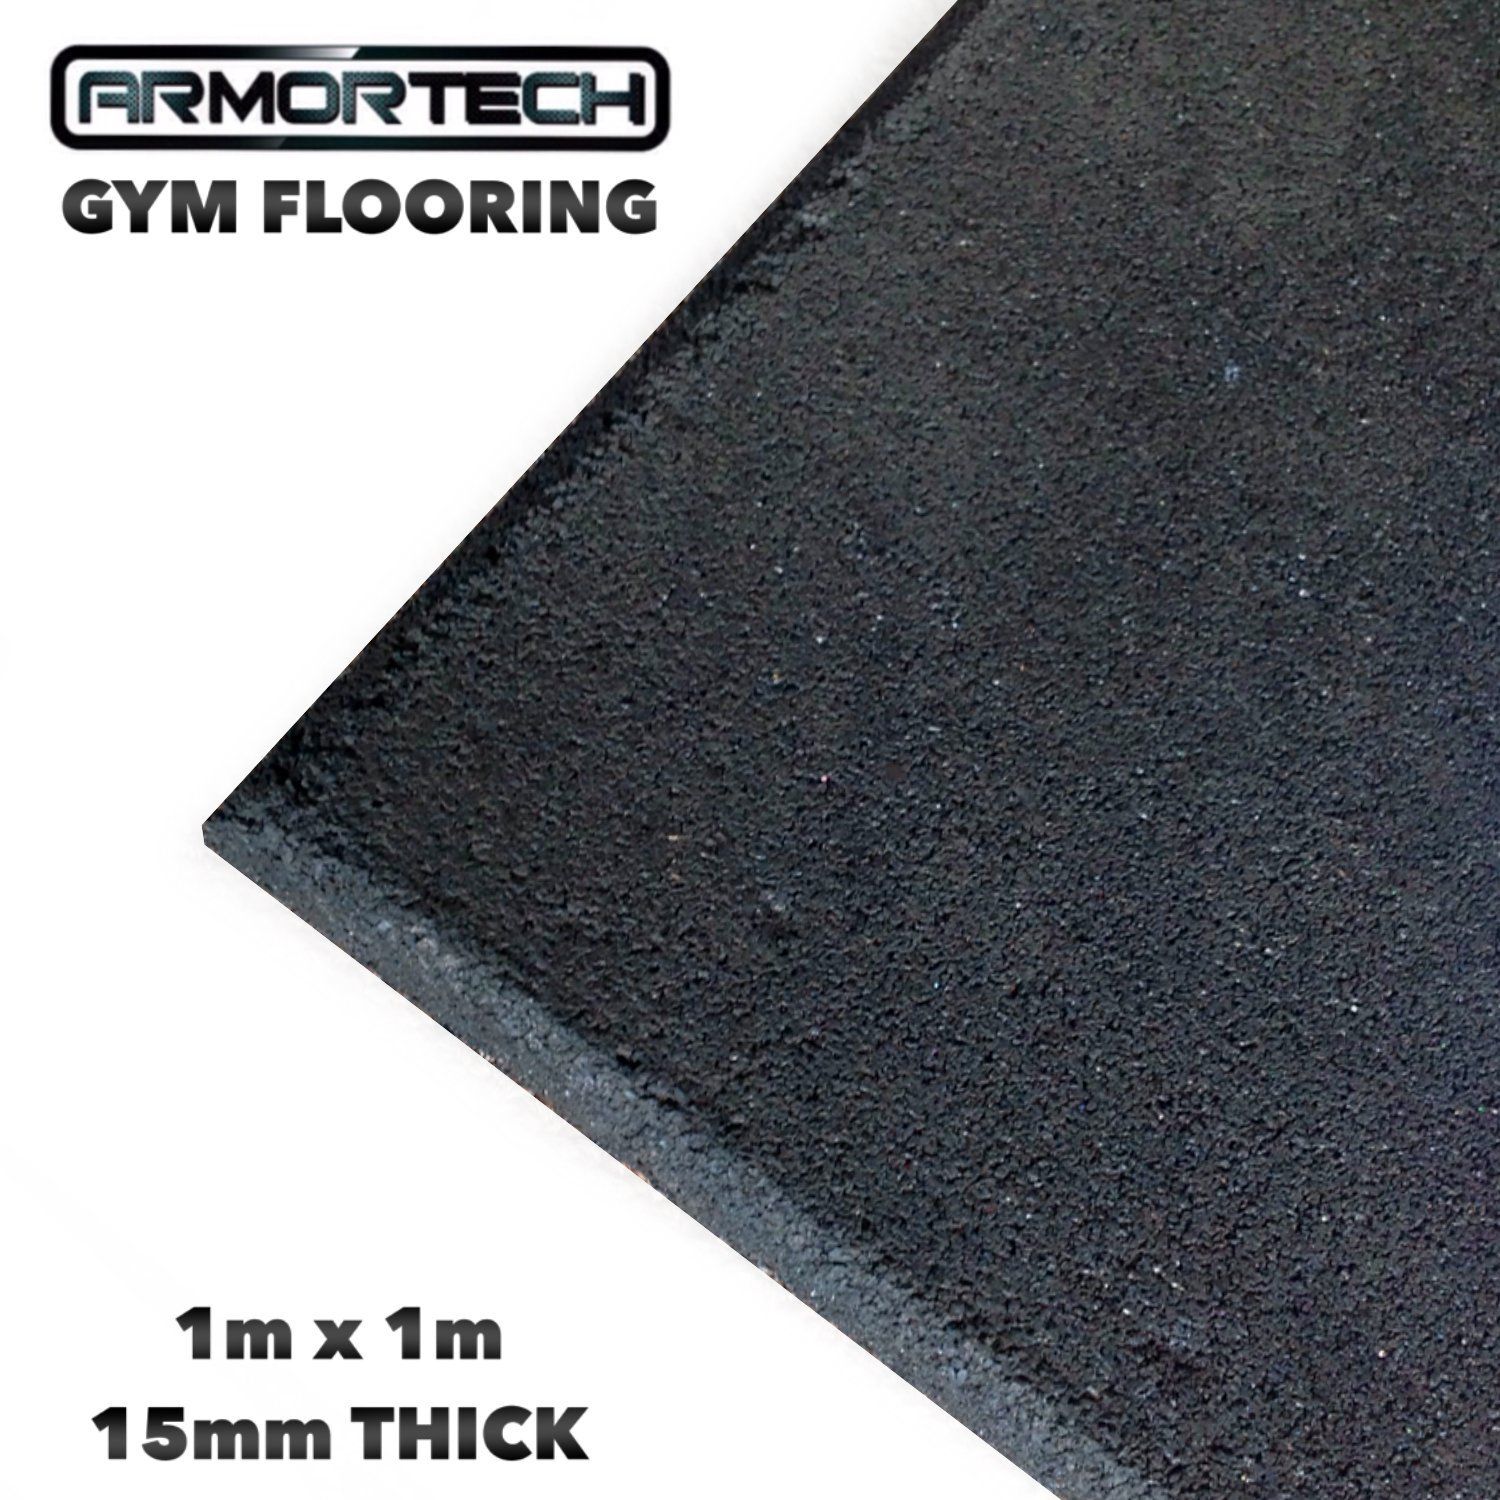 Armortech Commercial Gym Flooring Black 1x1m x 15mm